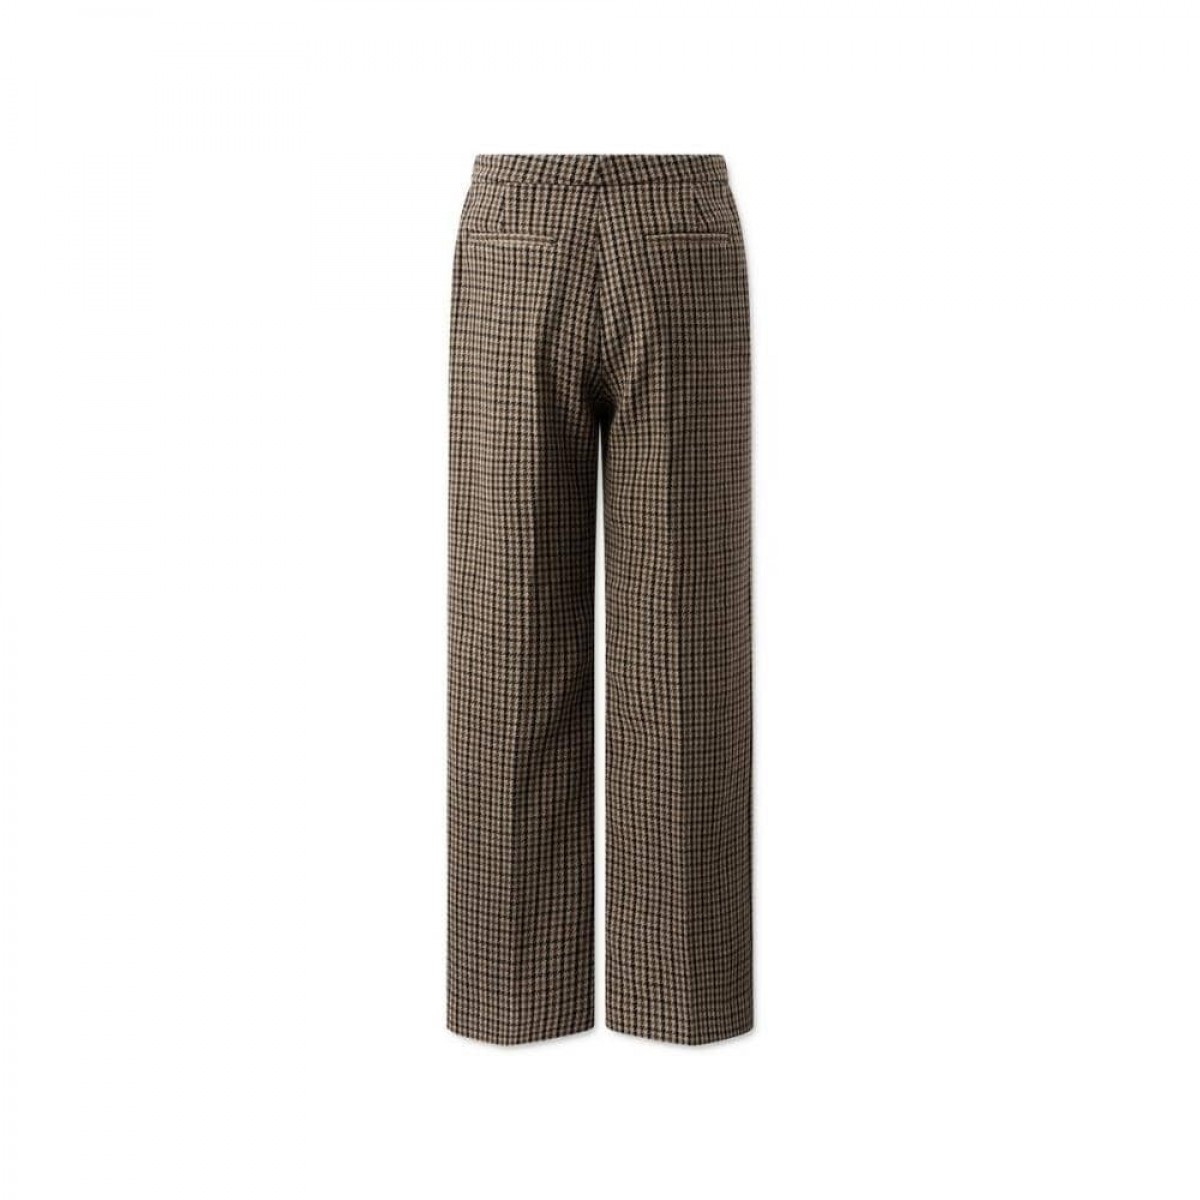 lea pants - brown - bag